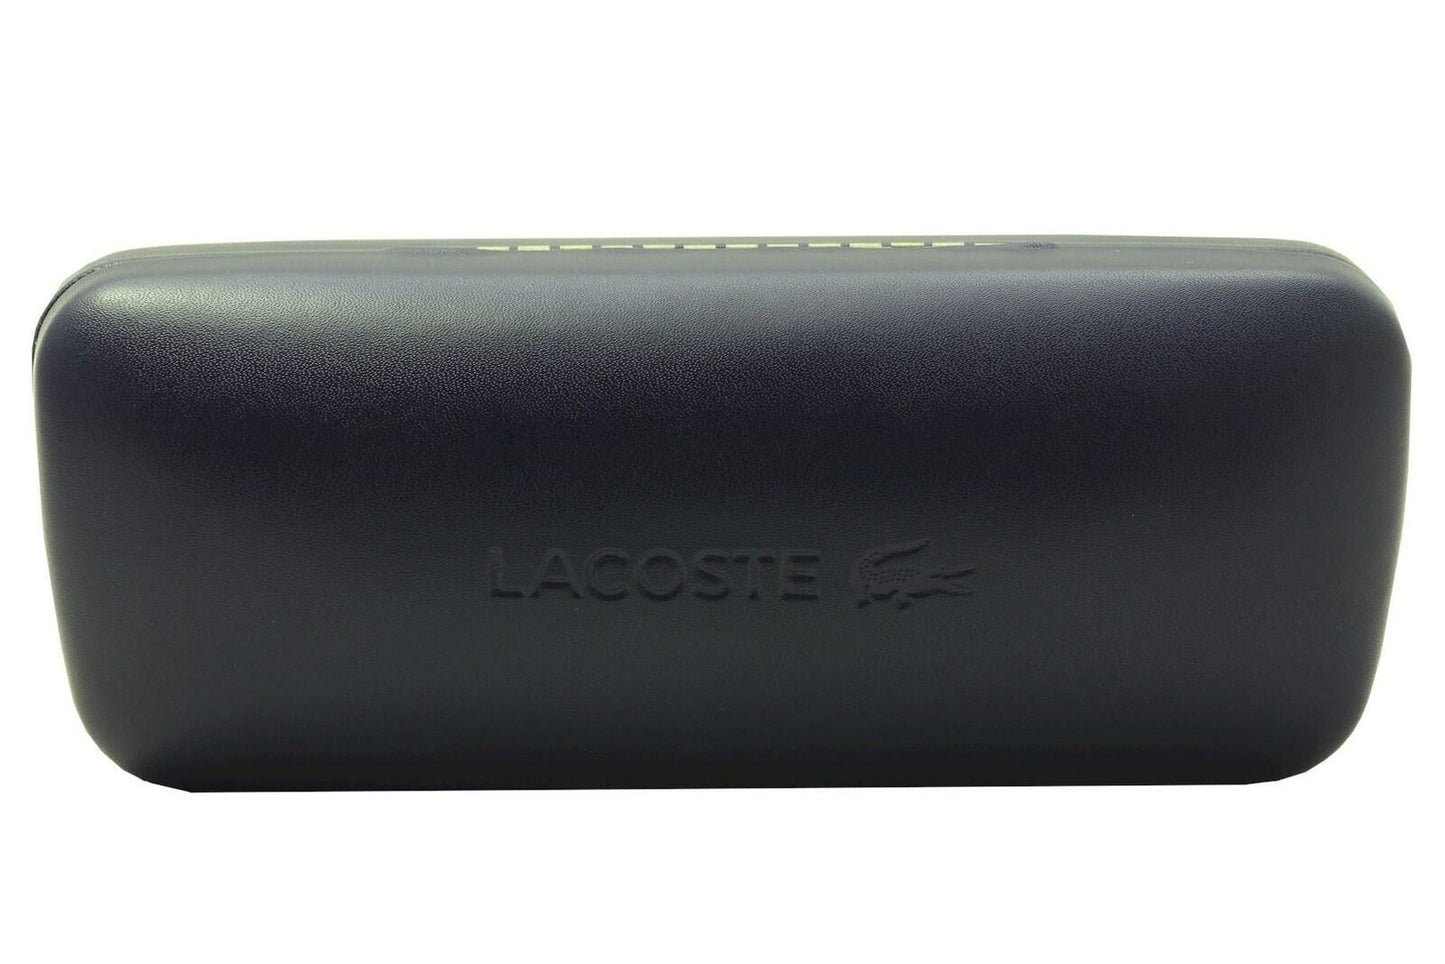 Lacoste L2900-230-55 55mm New Eyeglasses